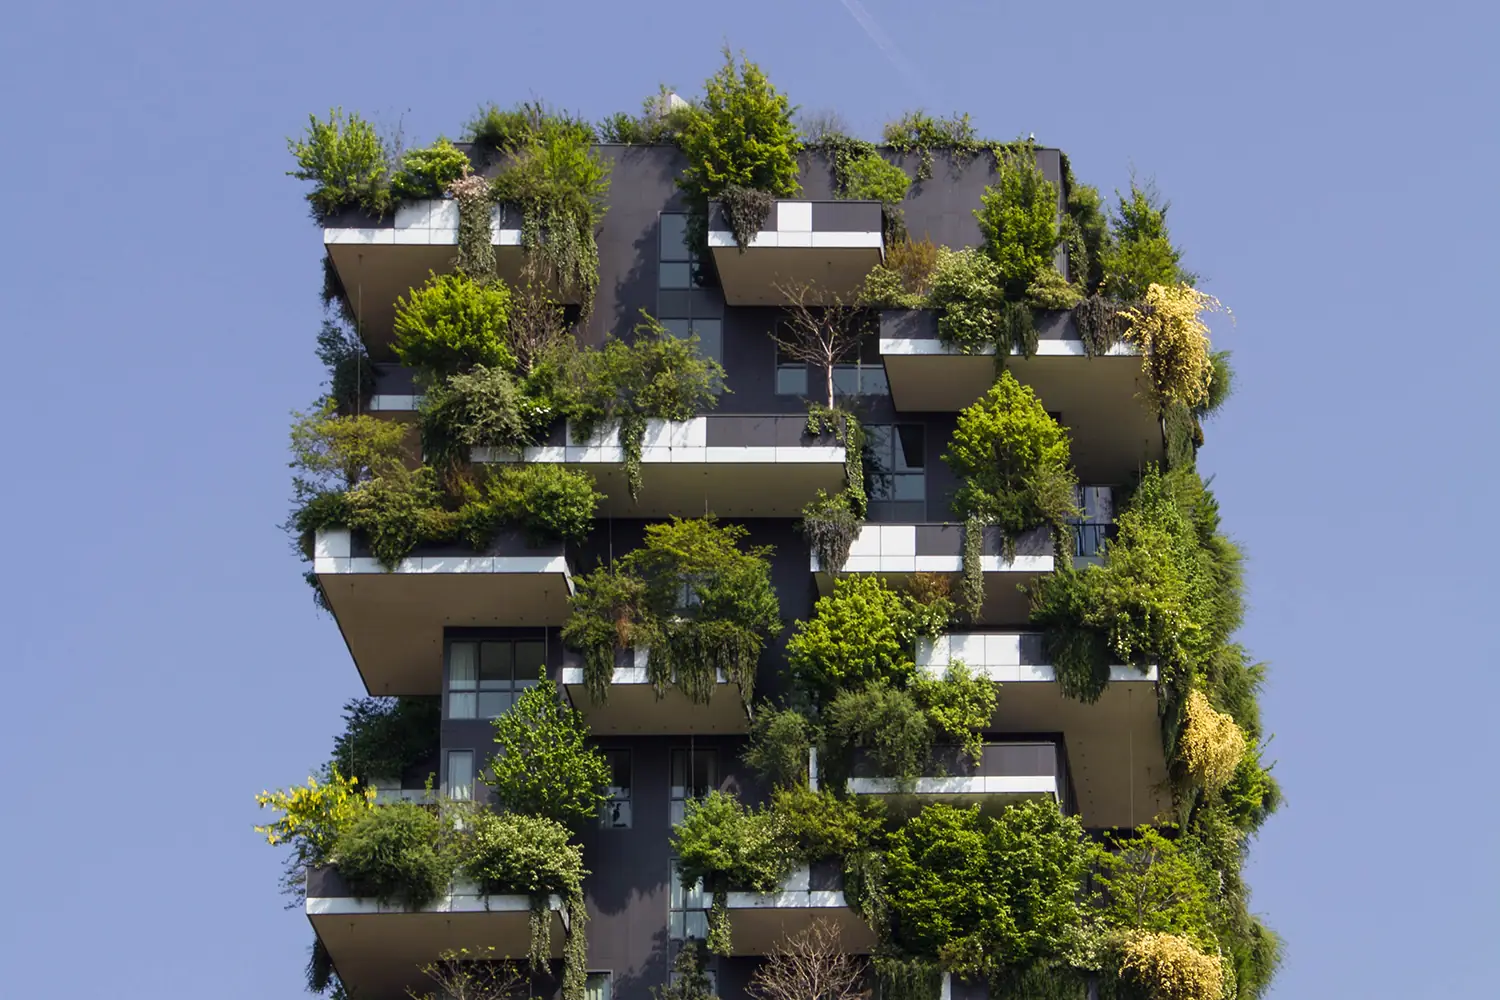 Building with vegetation